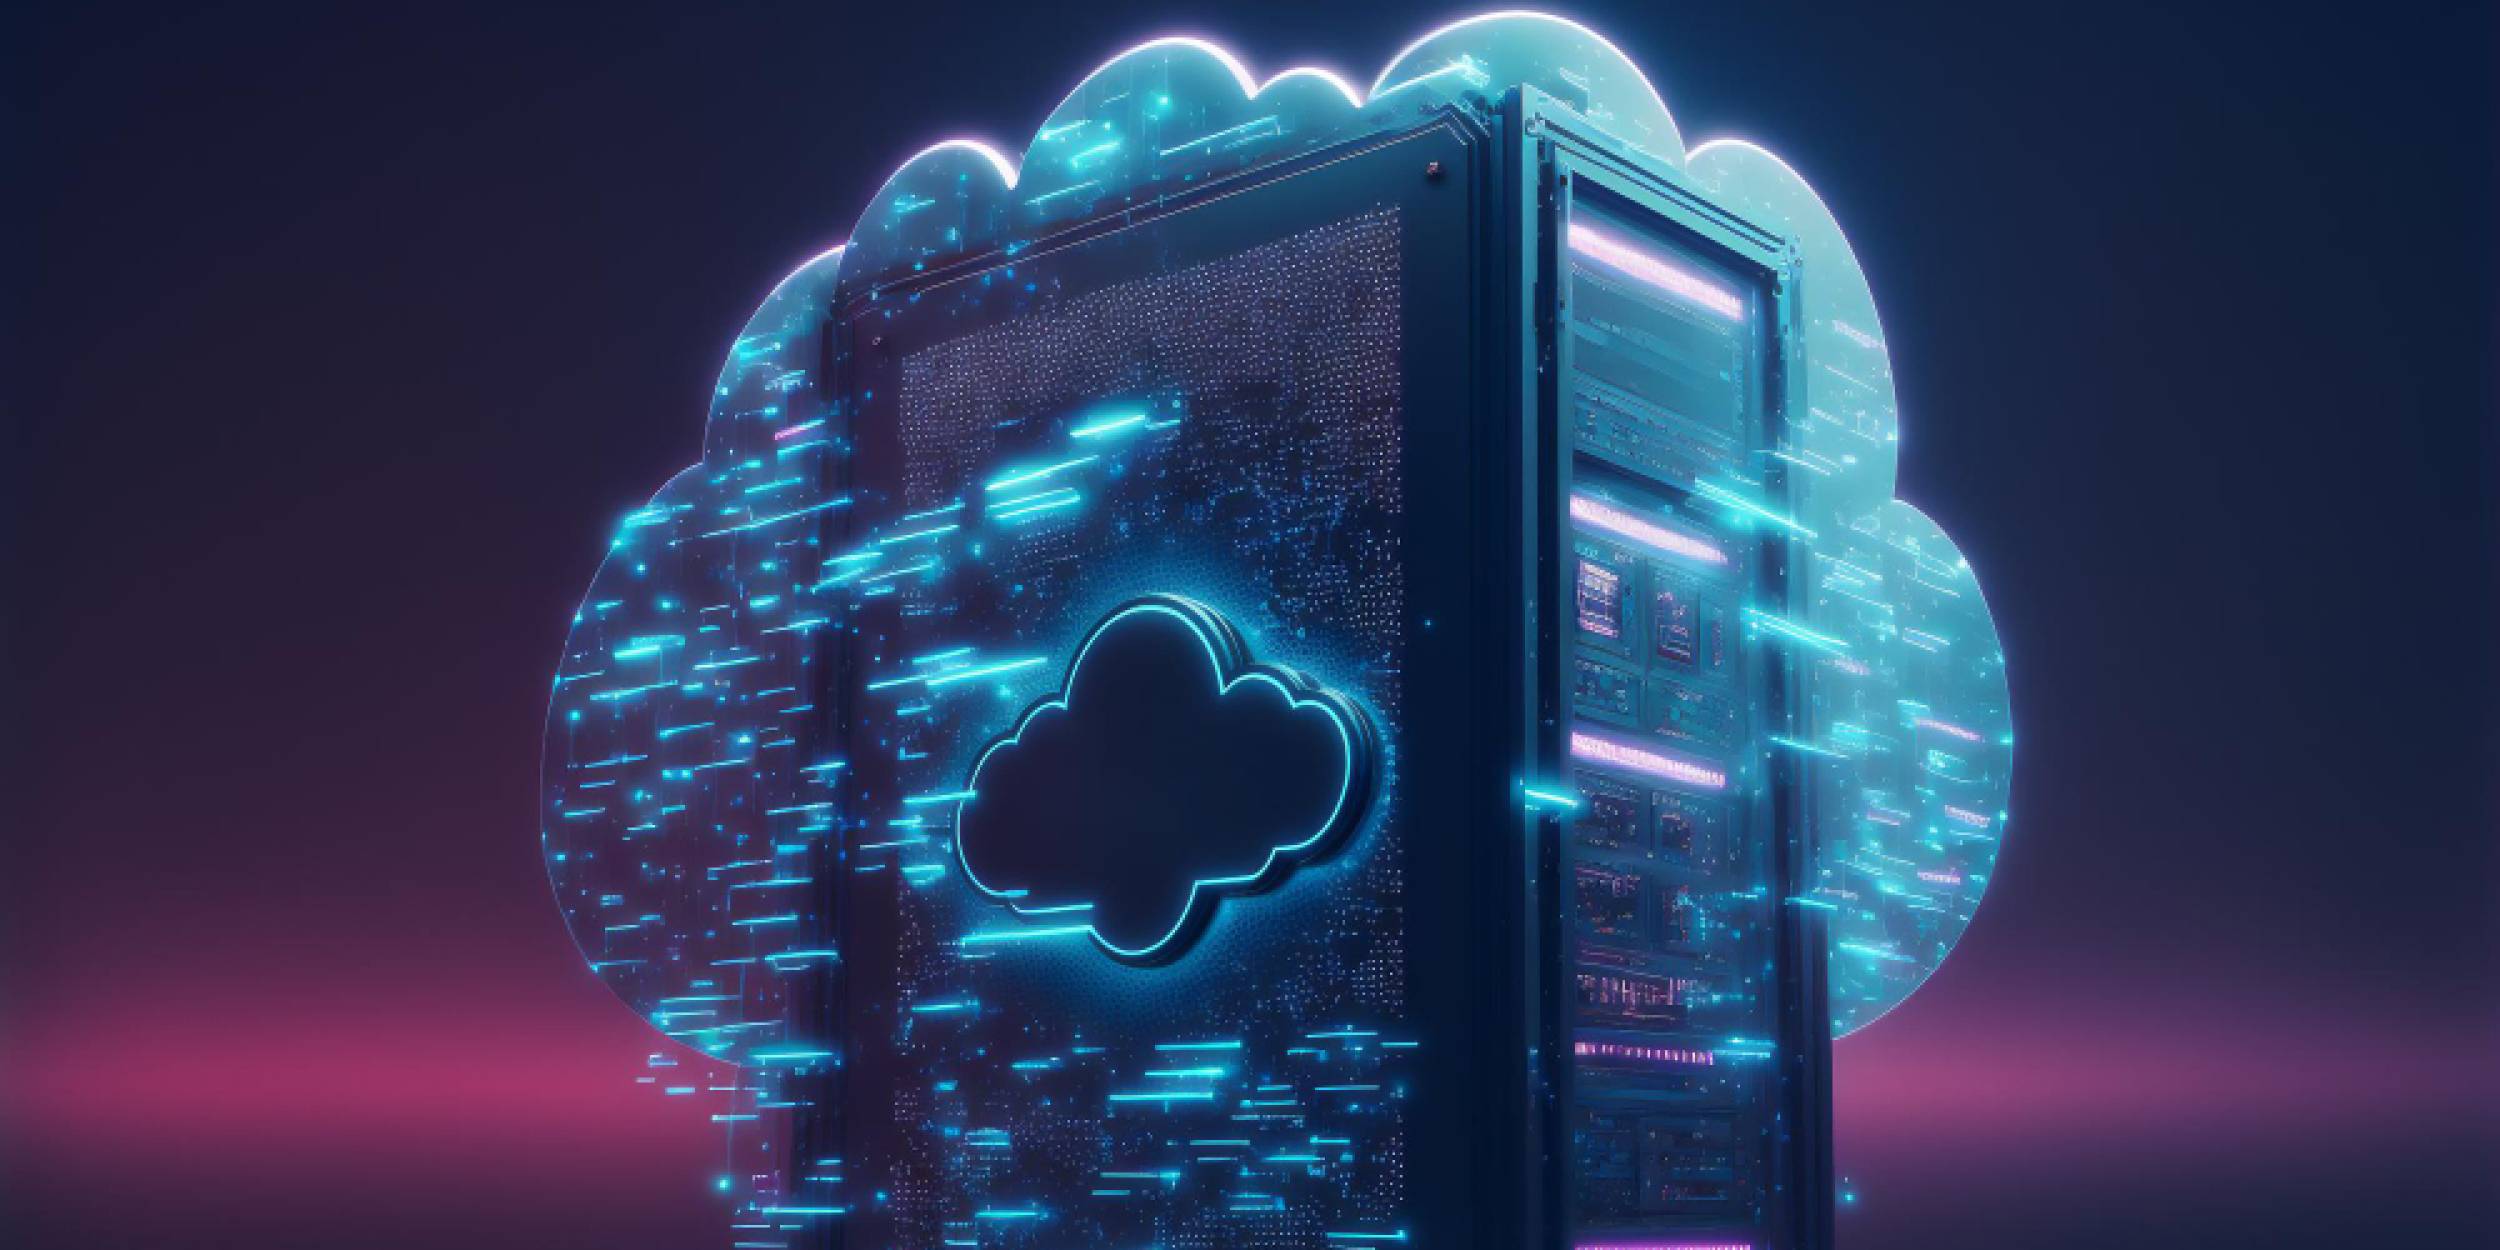 Cloud Computing capabilities